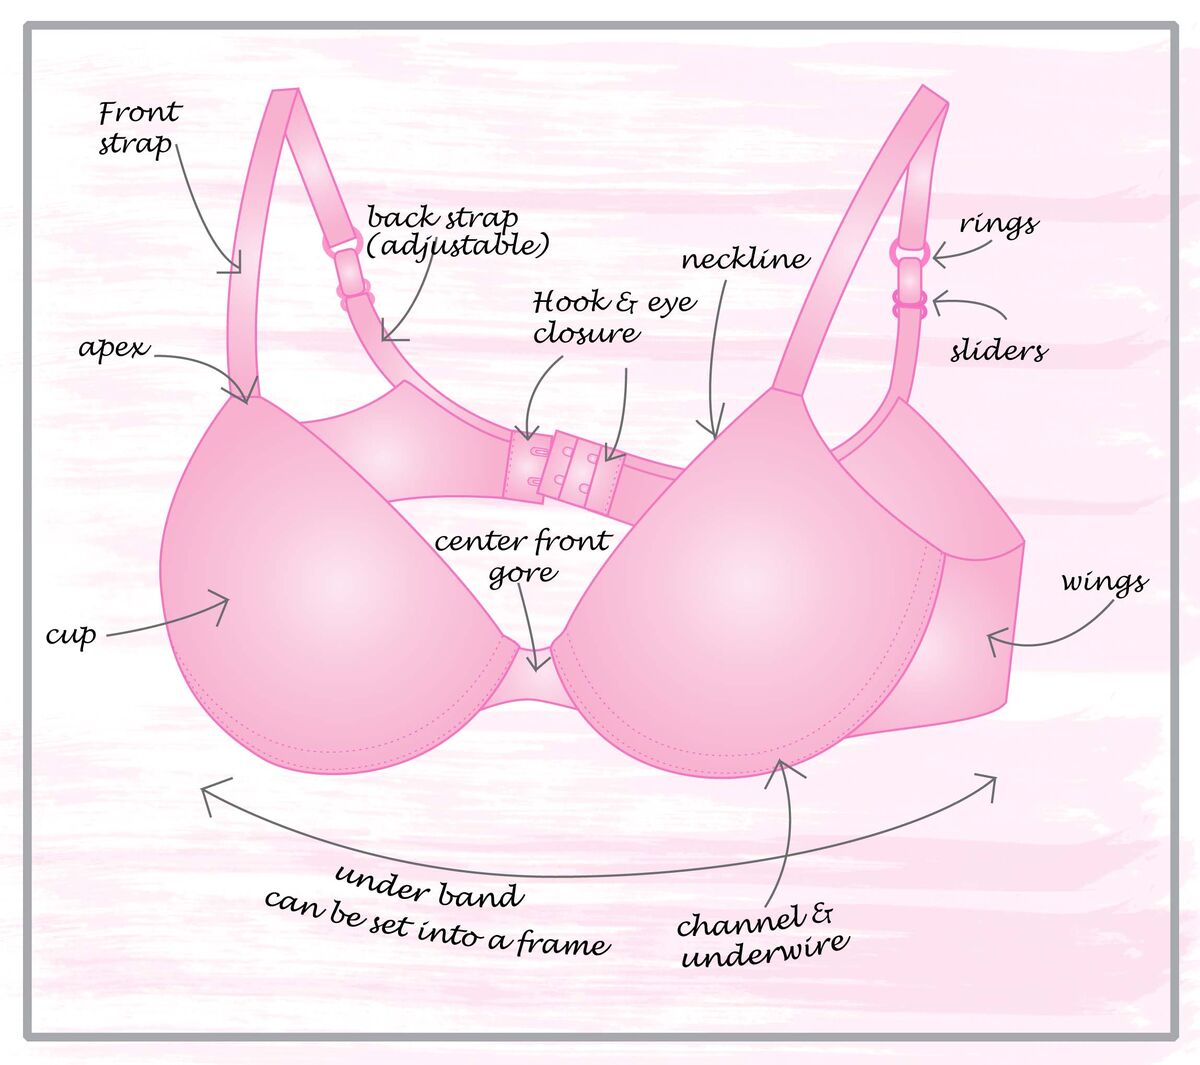 List of bra designs - Wikipedia